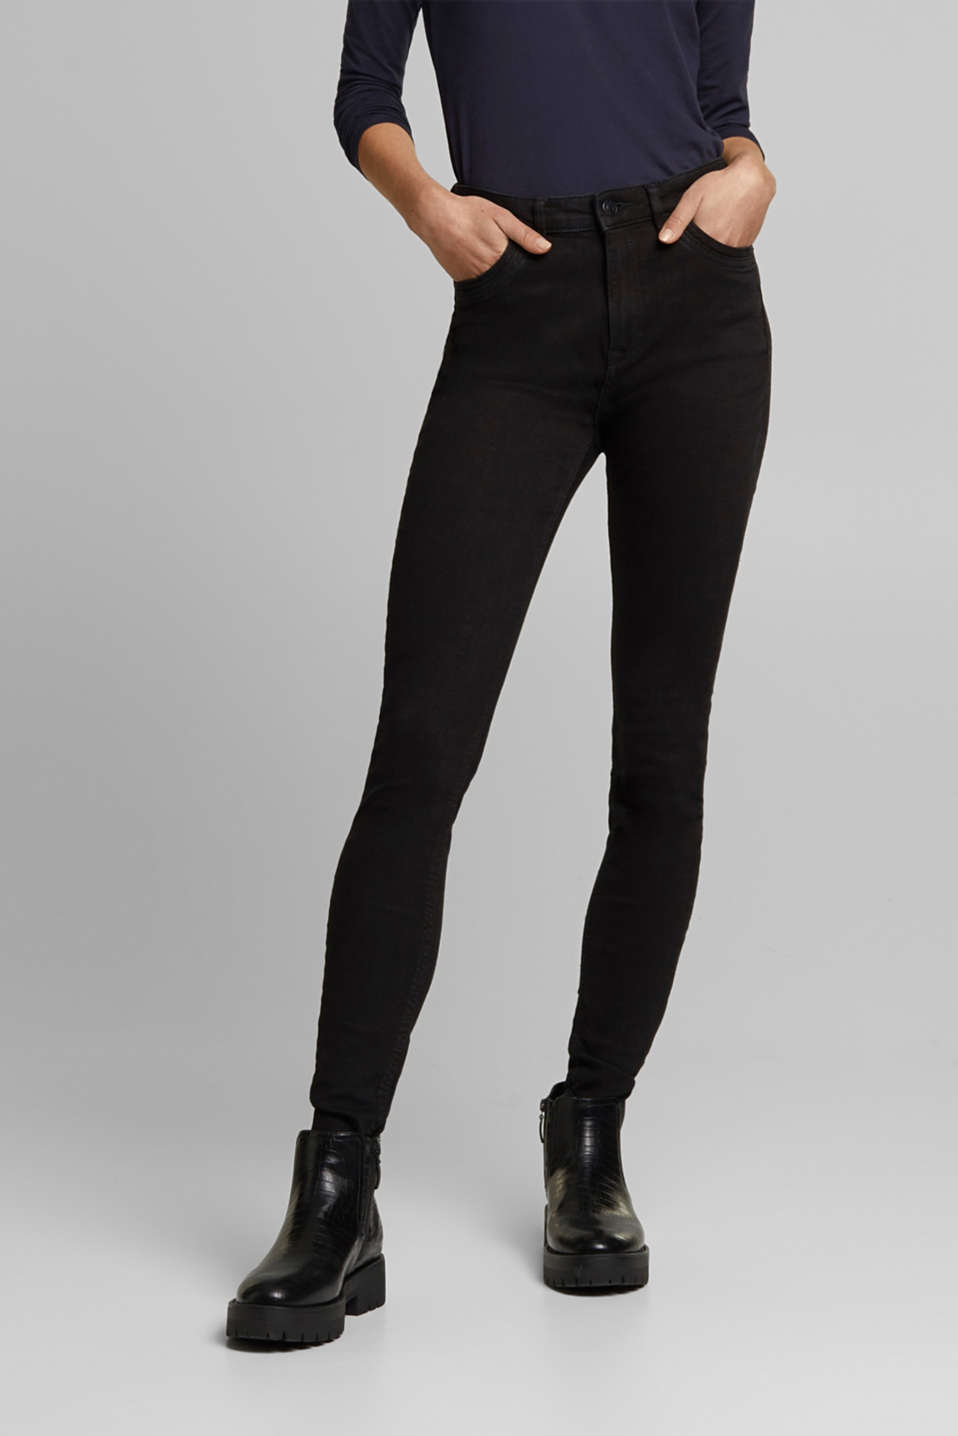 Esprit - Organic cotton skinny jeans at our Online Shop